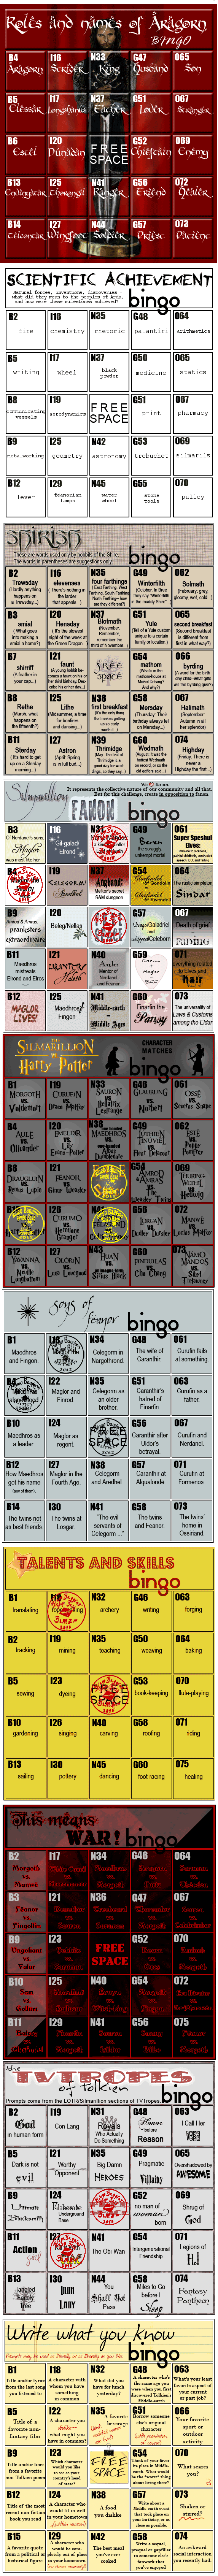 Tyelkormo's Bingo Cards